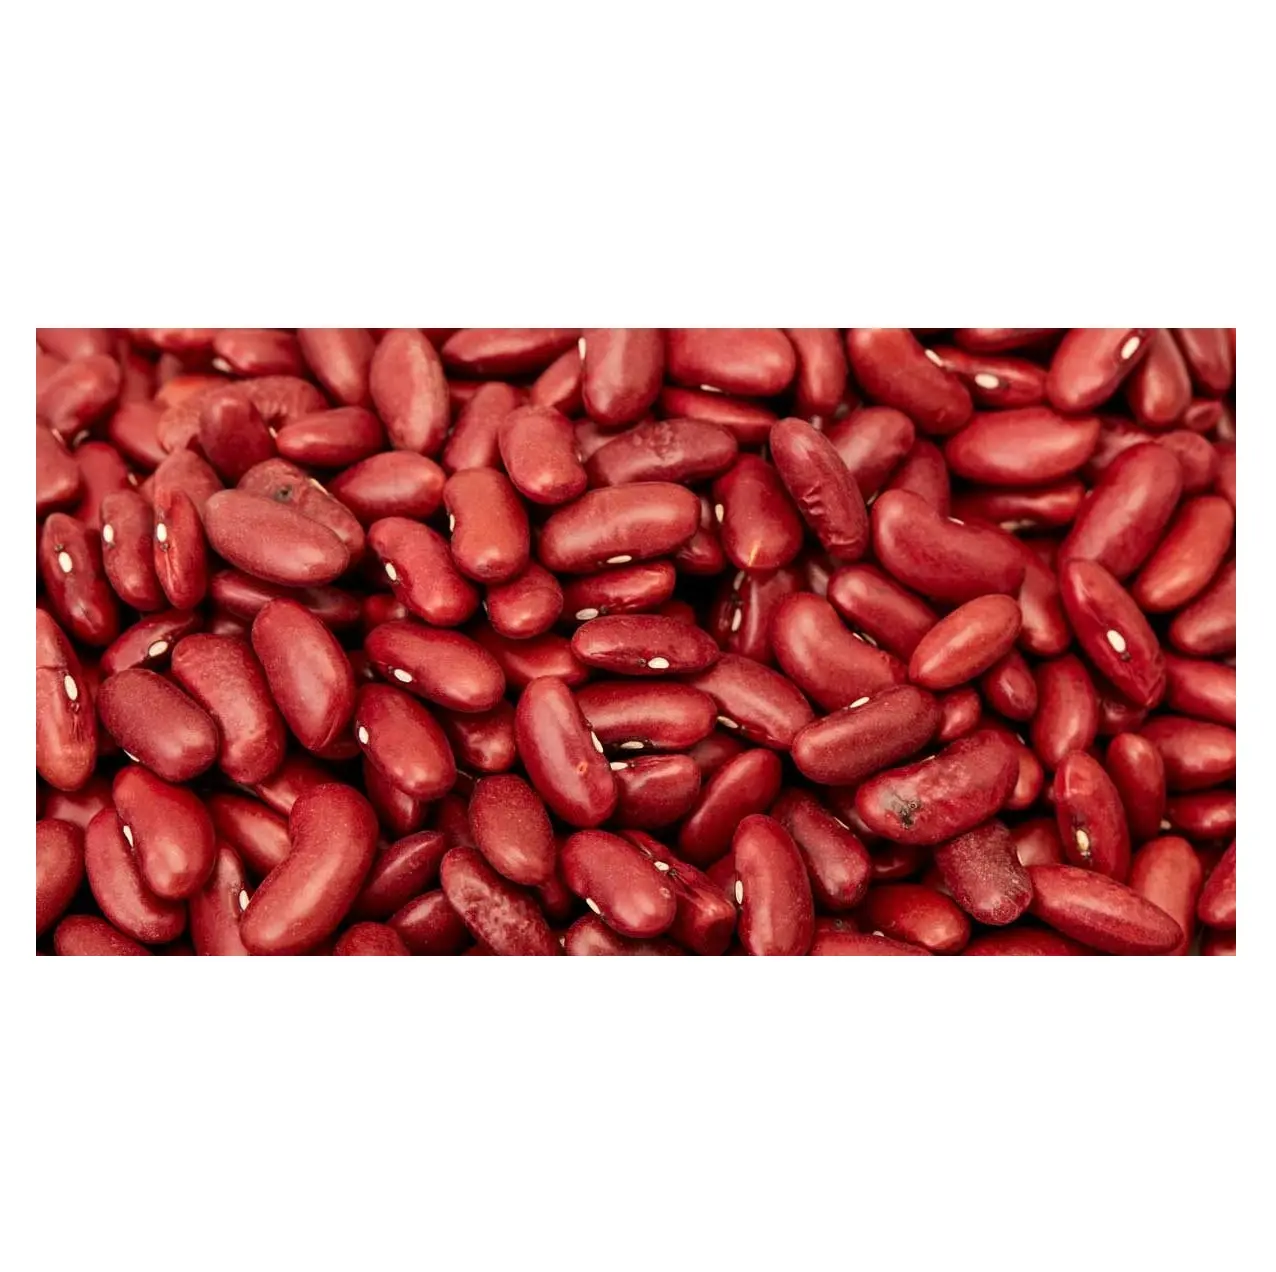 Red Kidney Beans Organic Dried Small Dark Red Kidney Beans Buyer (Rajma)